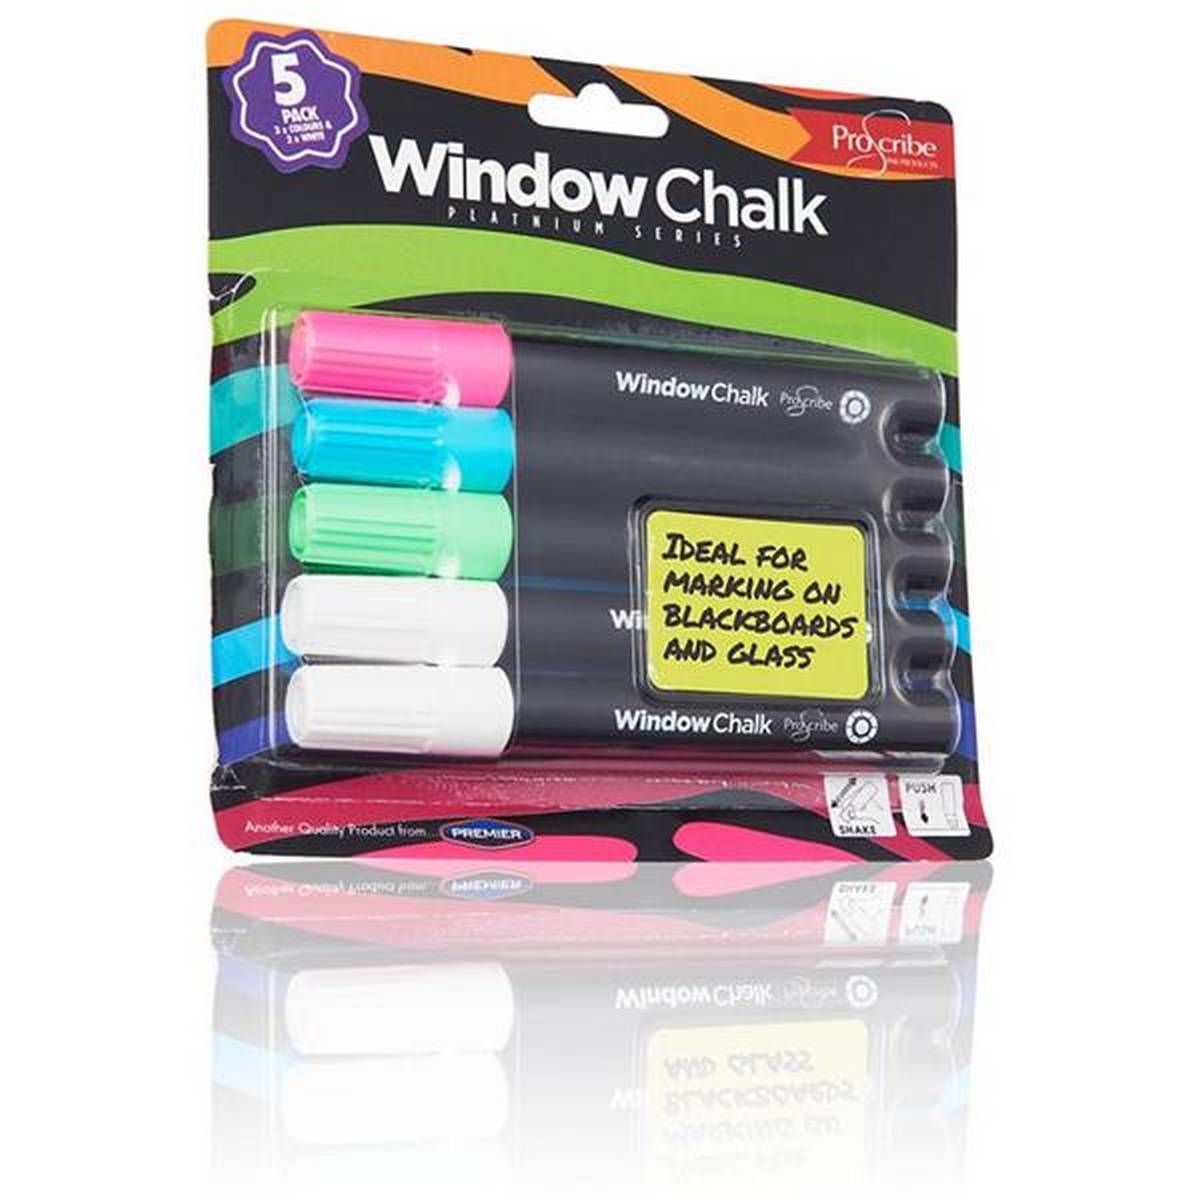 Pro:scribe Card 5 Window Chalk Markers